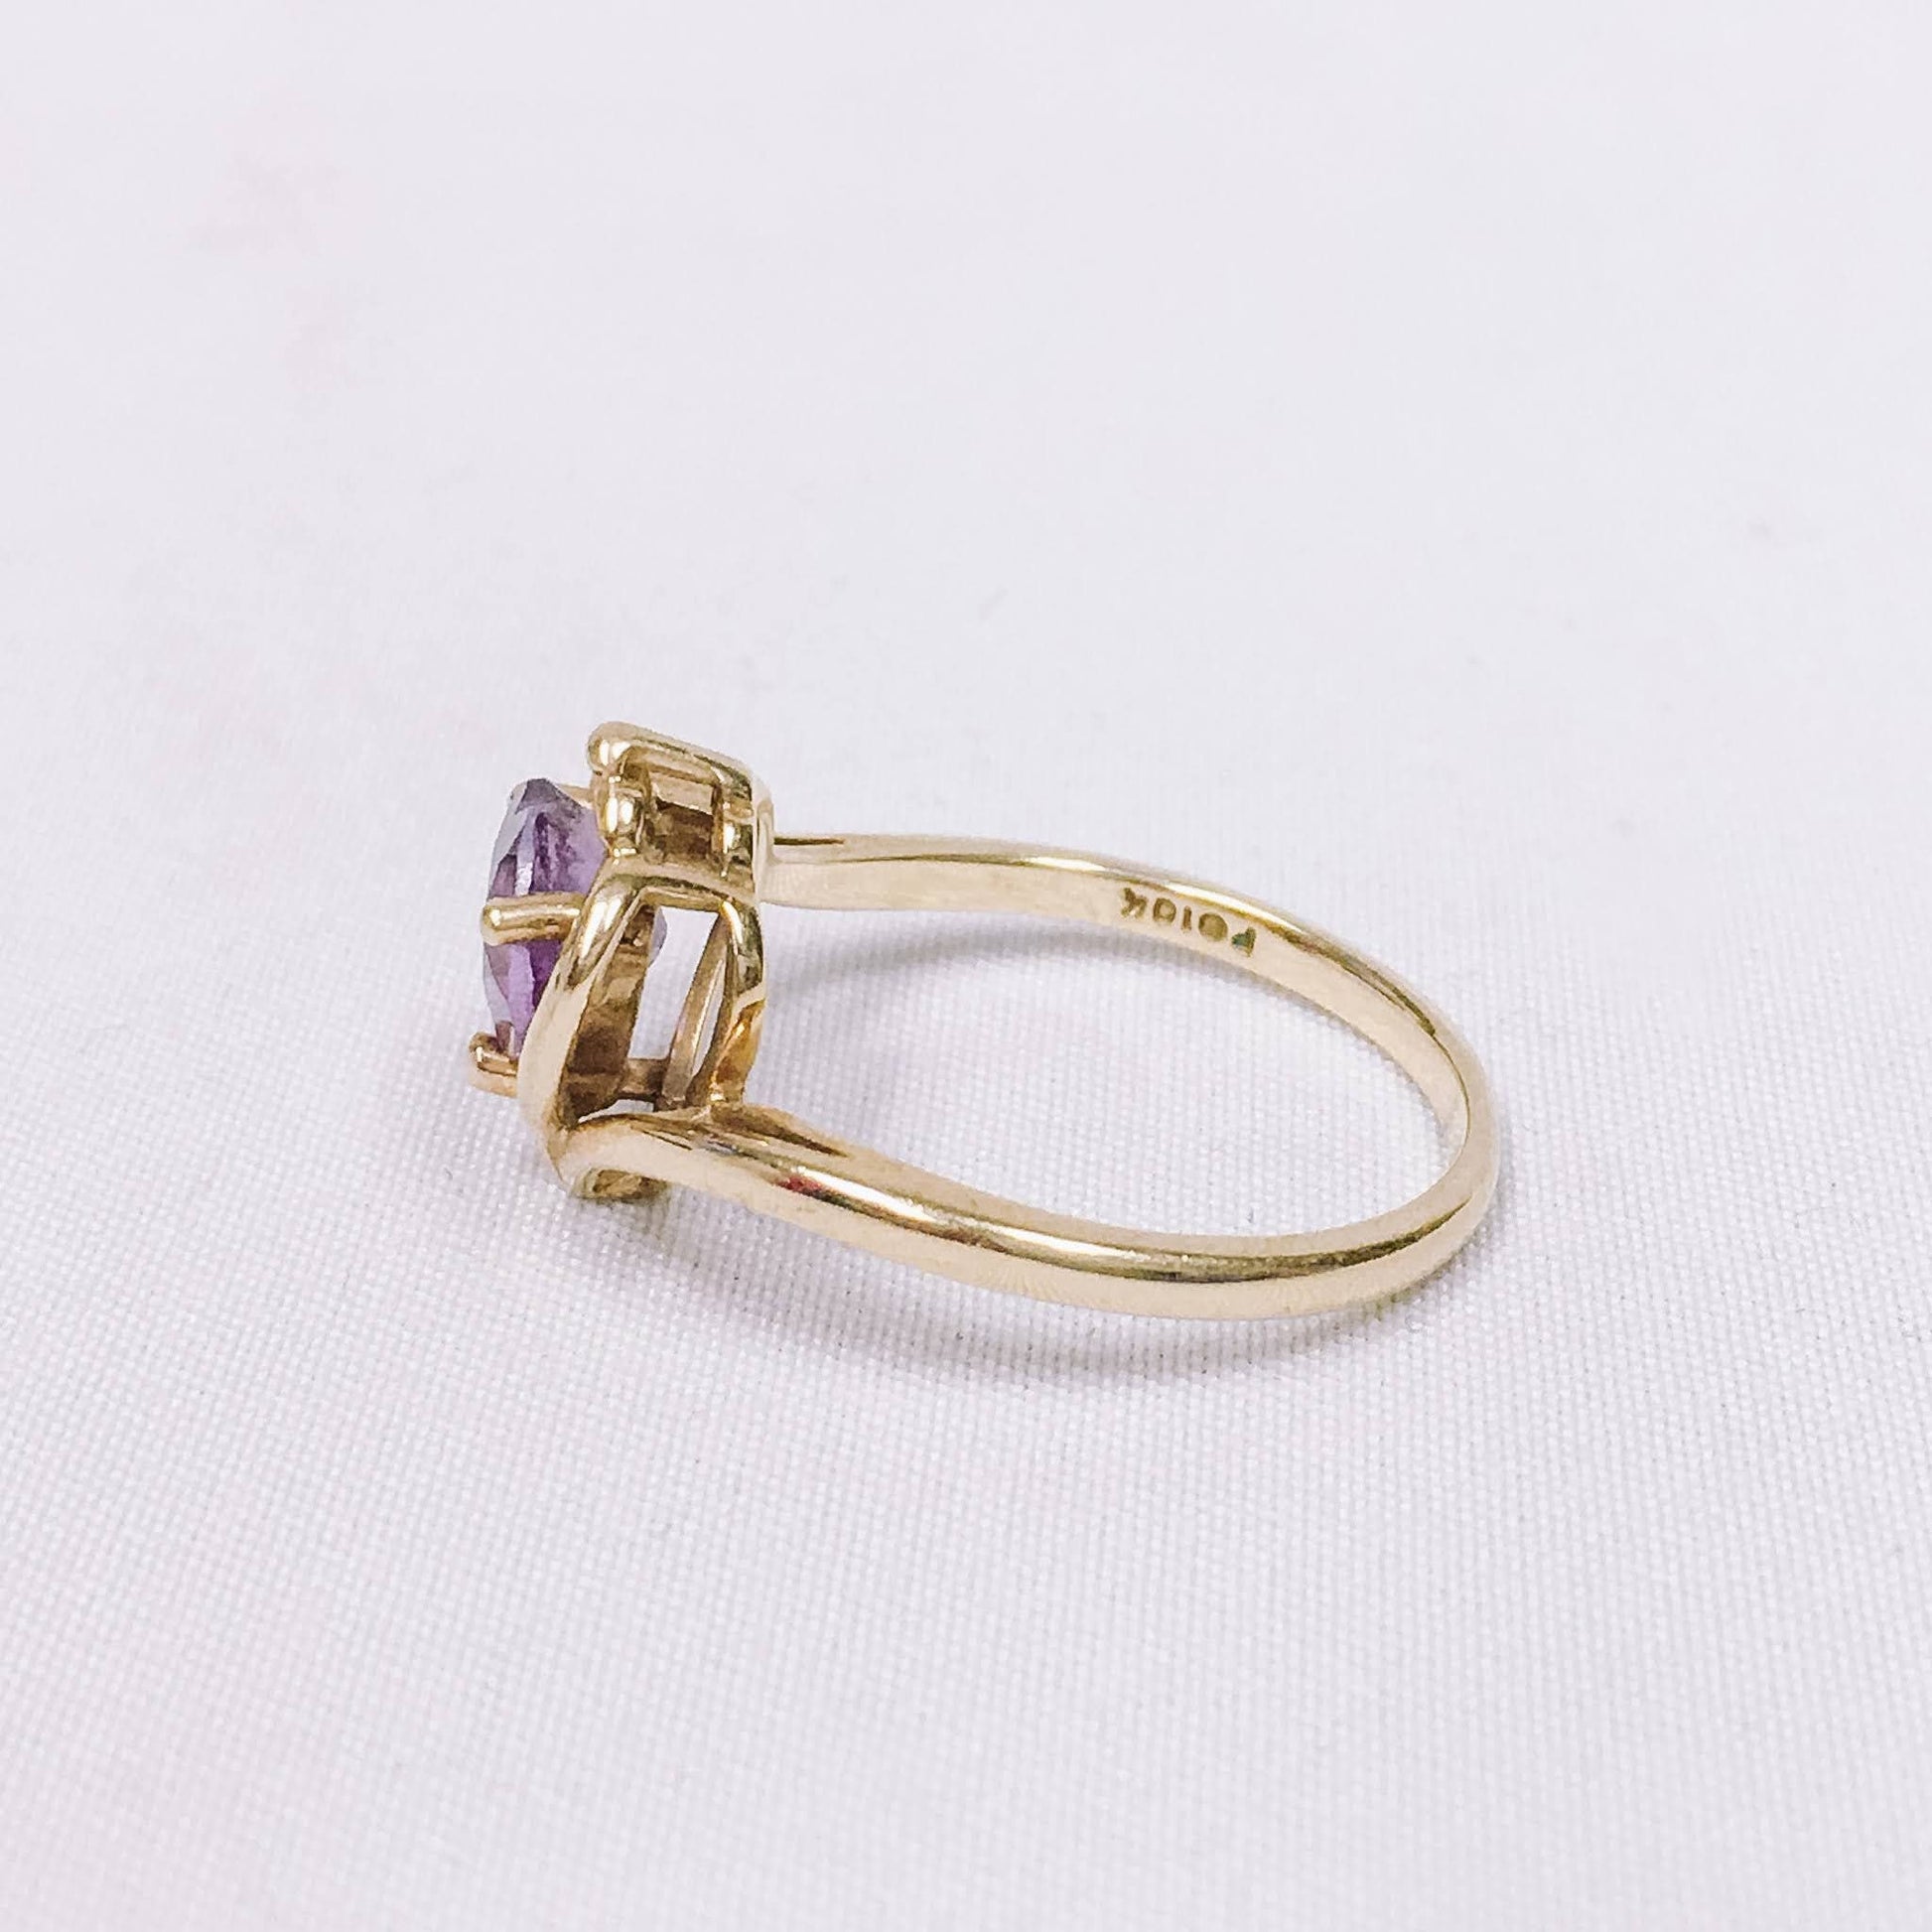 Vintage 1980's 10k Amethyst Heart Ring, Vintage Gold Engagement/Promise Ring, Size 6